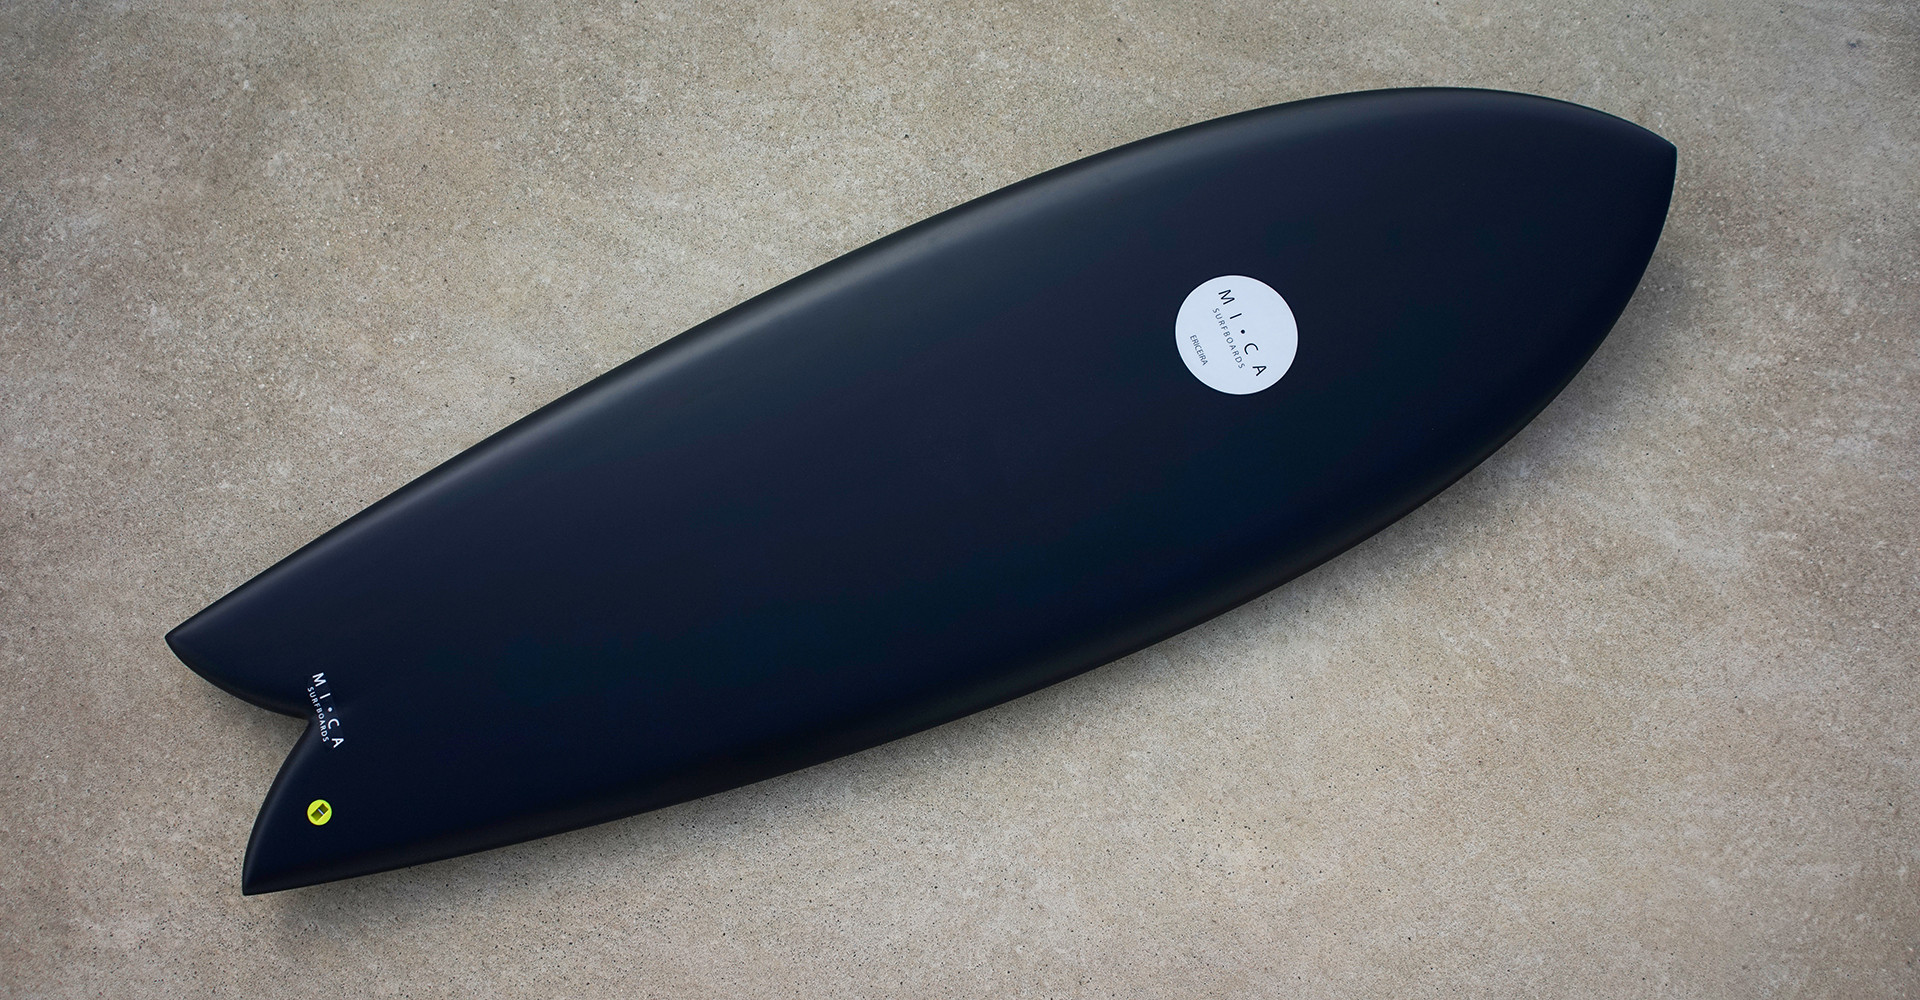 Jimi Model Retro Surfboard Black Matt Paint with Channels Twin Set Up Fish Surfboard